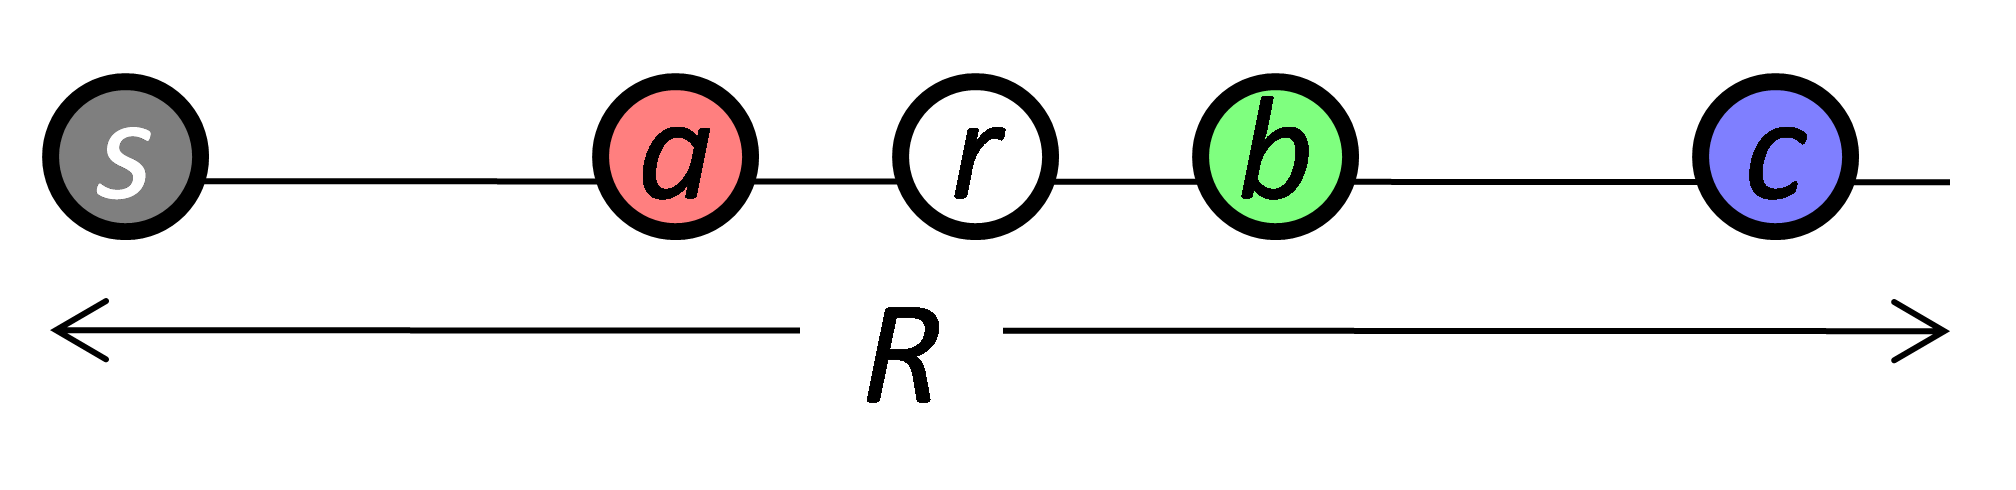 Figure 4. A scenario for node deployment